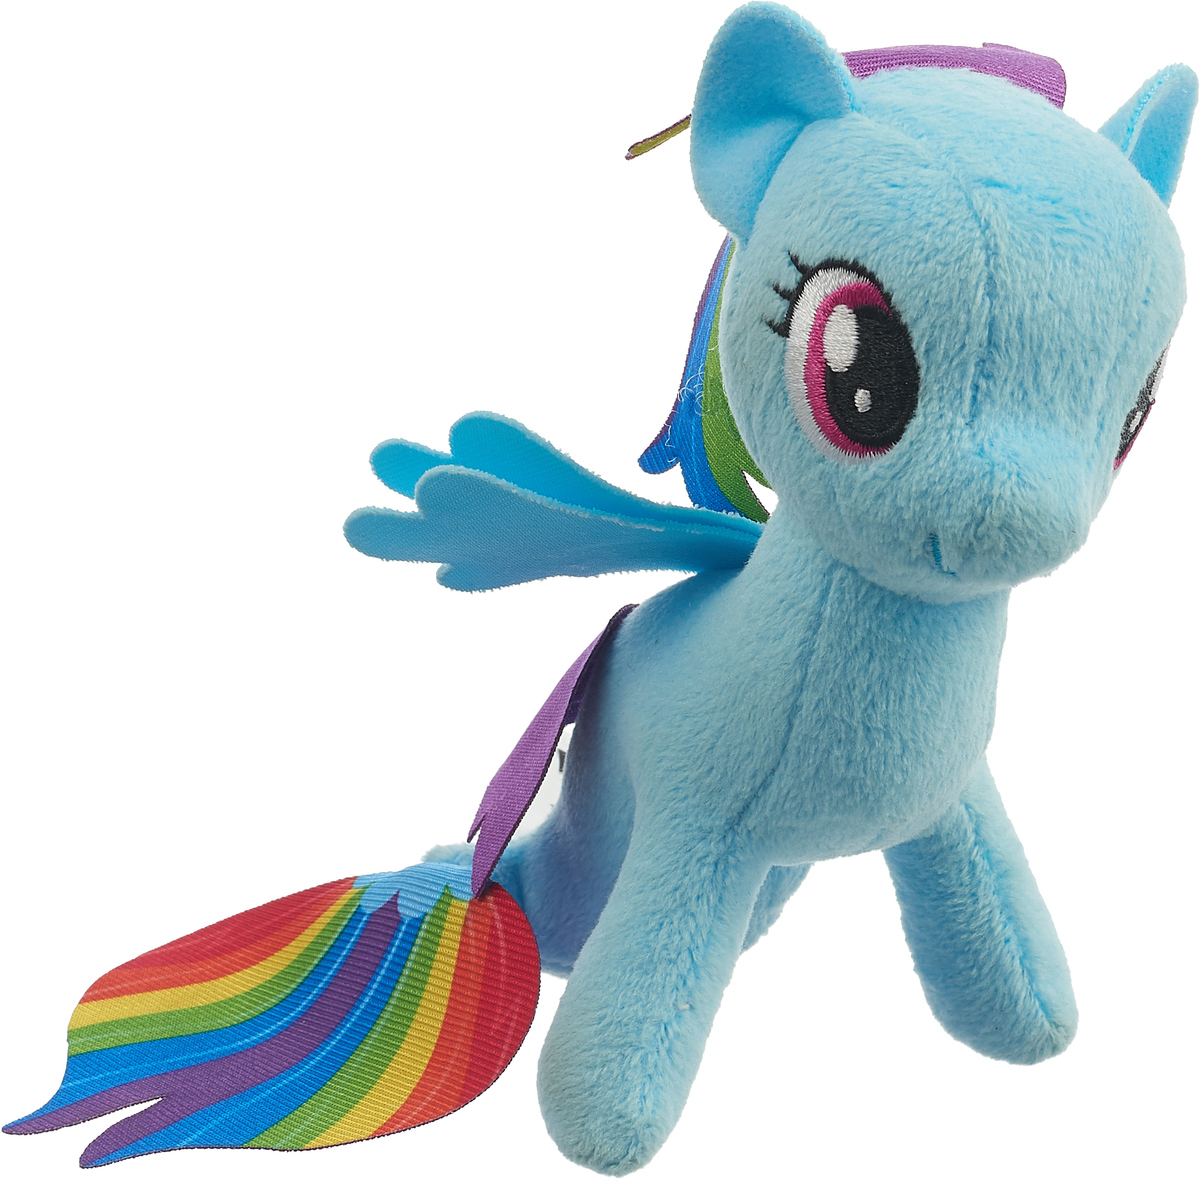 My Little Pony Мягкая игрушка Радуга Дэш 13 см